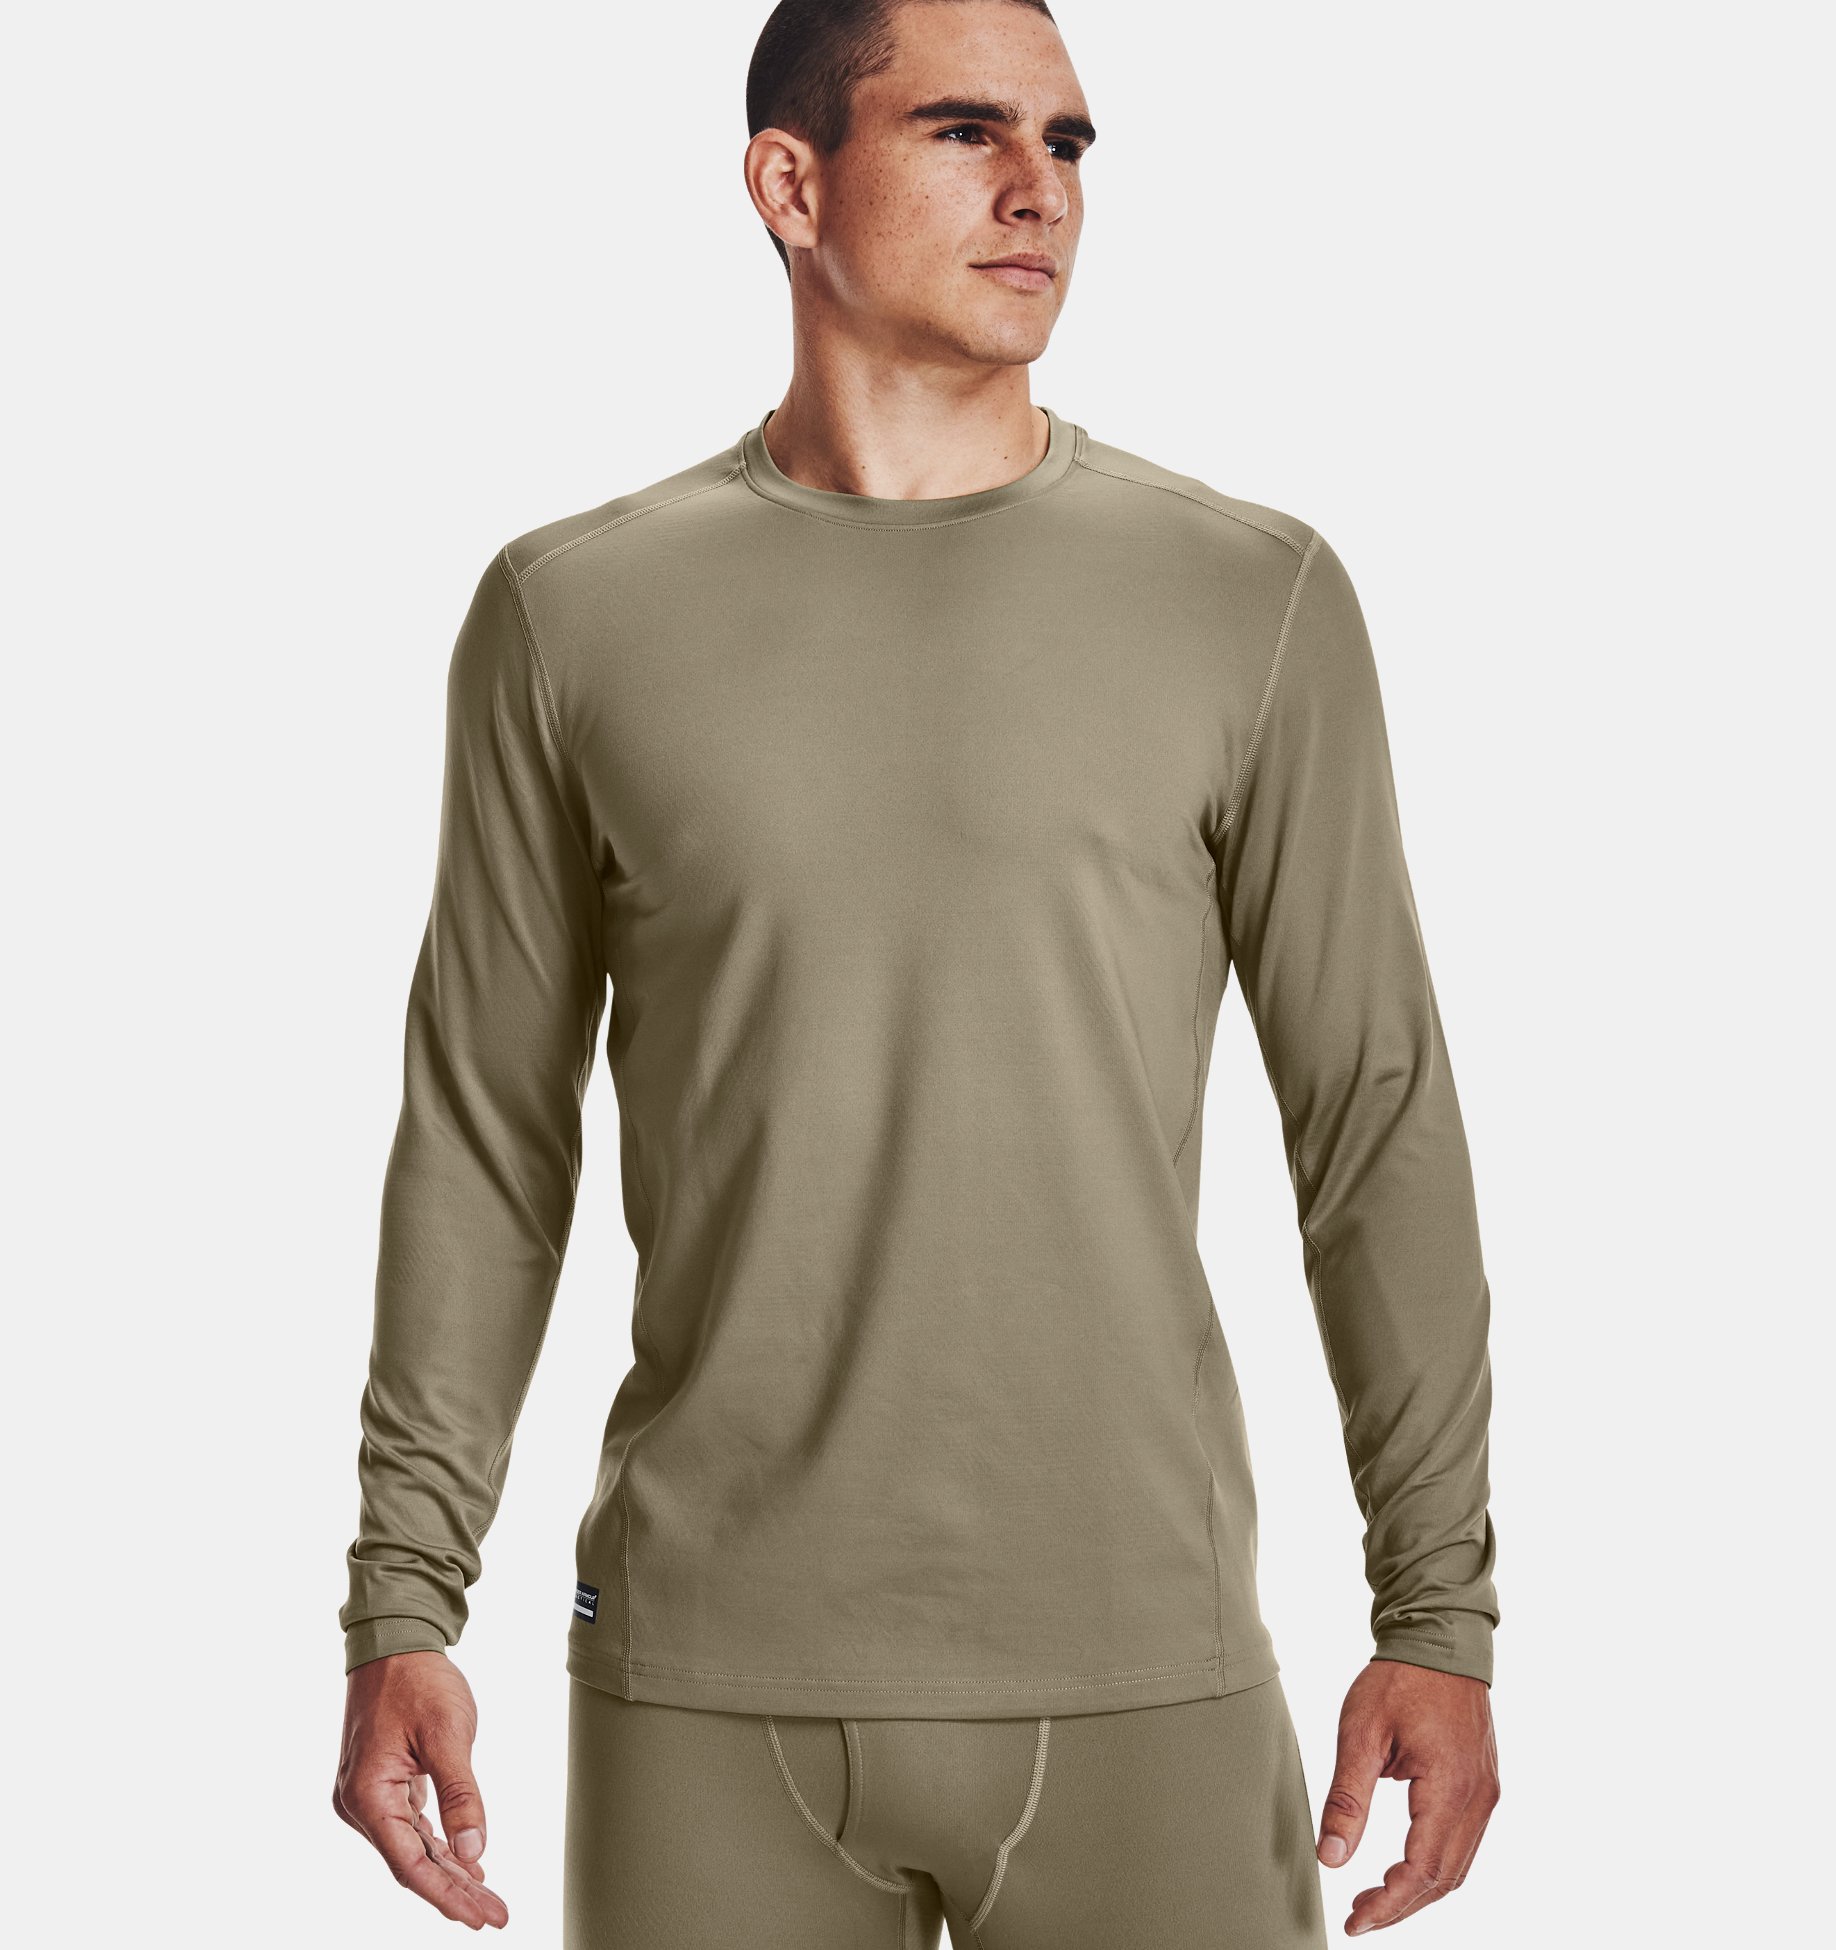 Under Armour 1280417 Men's ColdGear Infared Tactical Dual-Layer Shirt Size S-3XL 